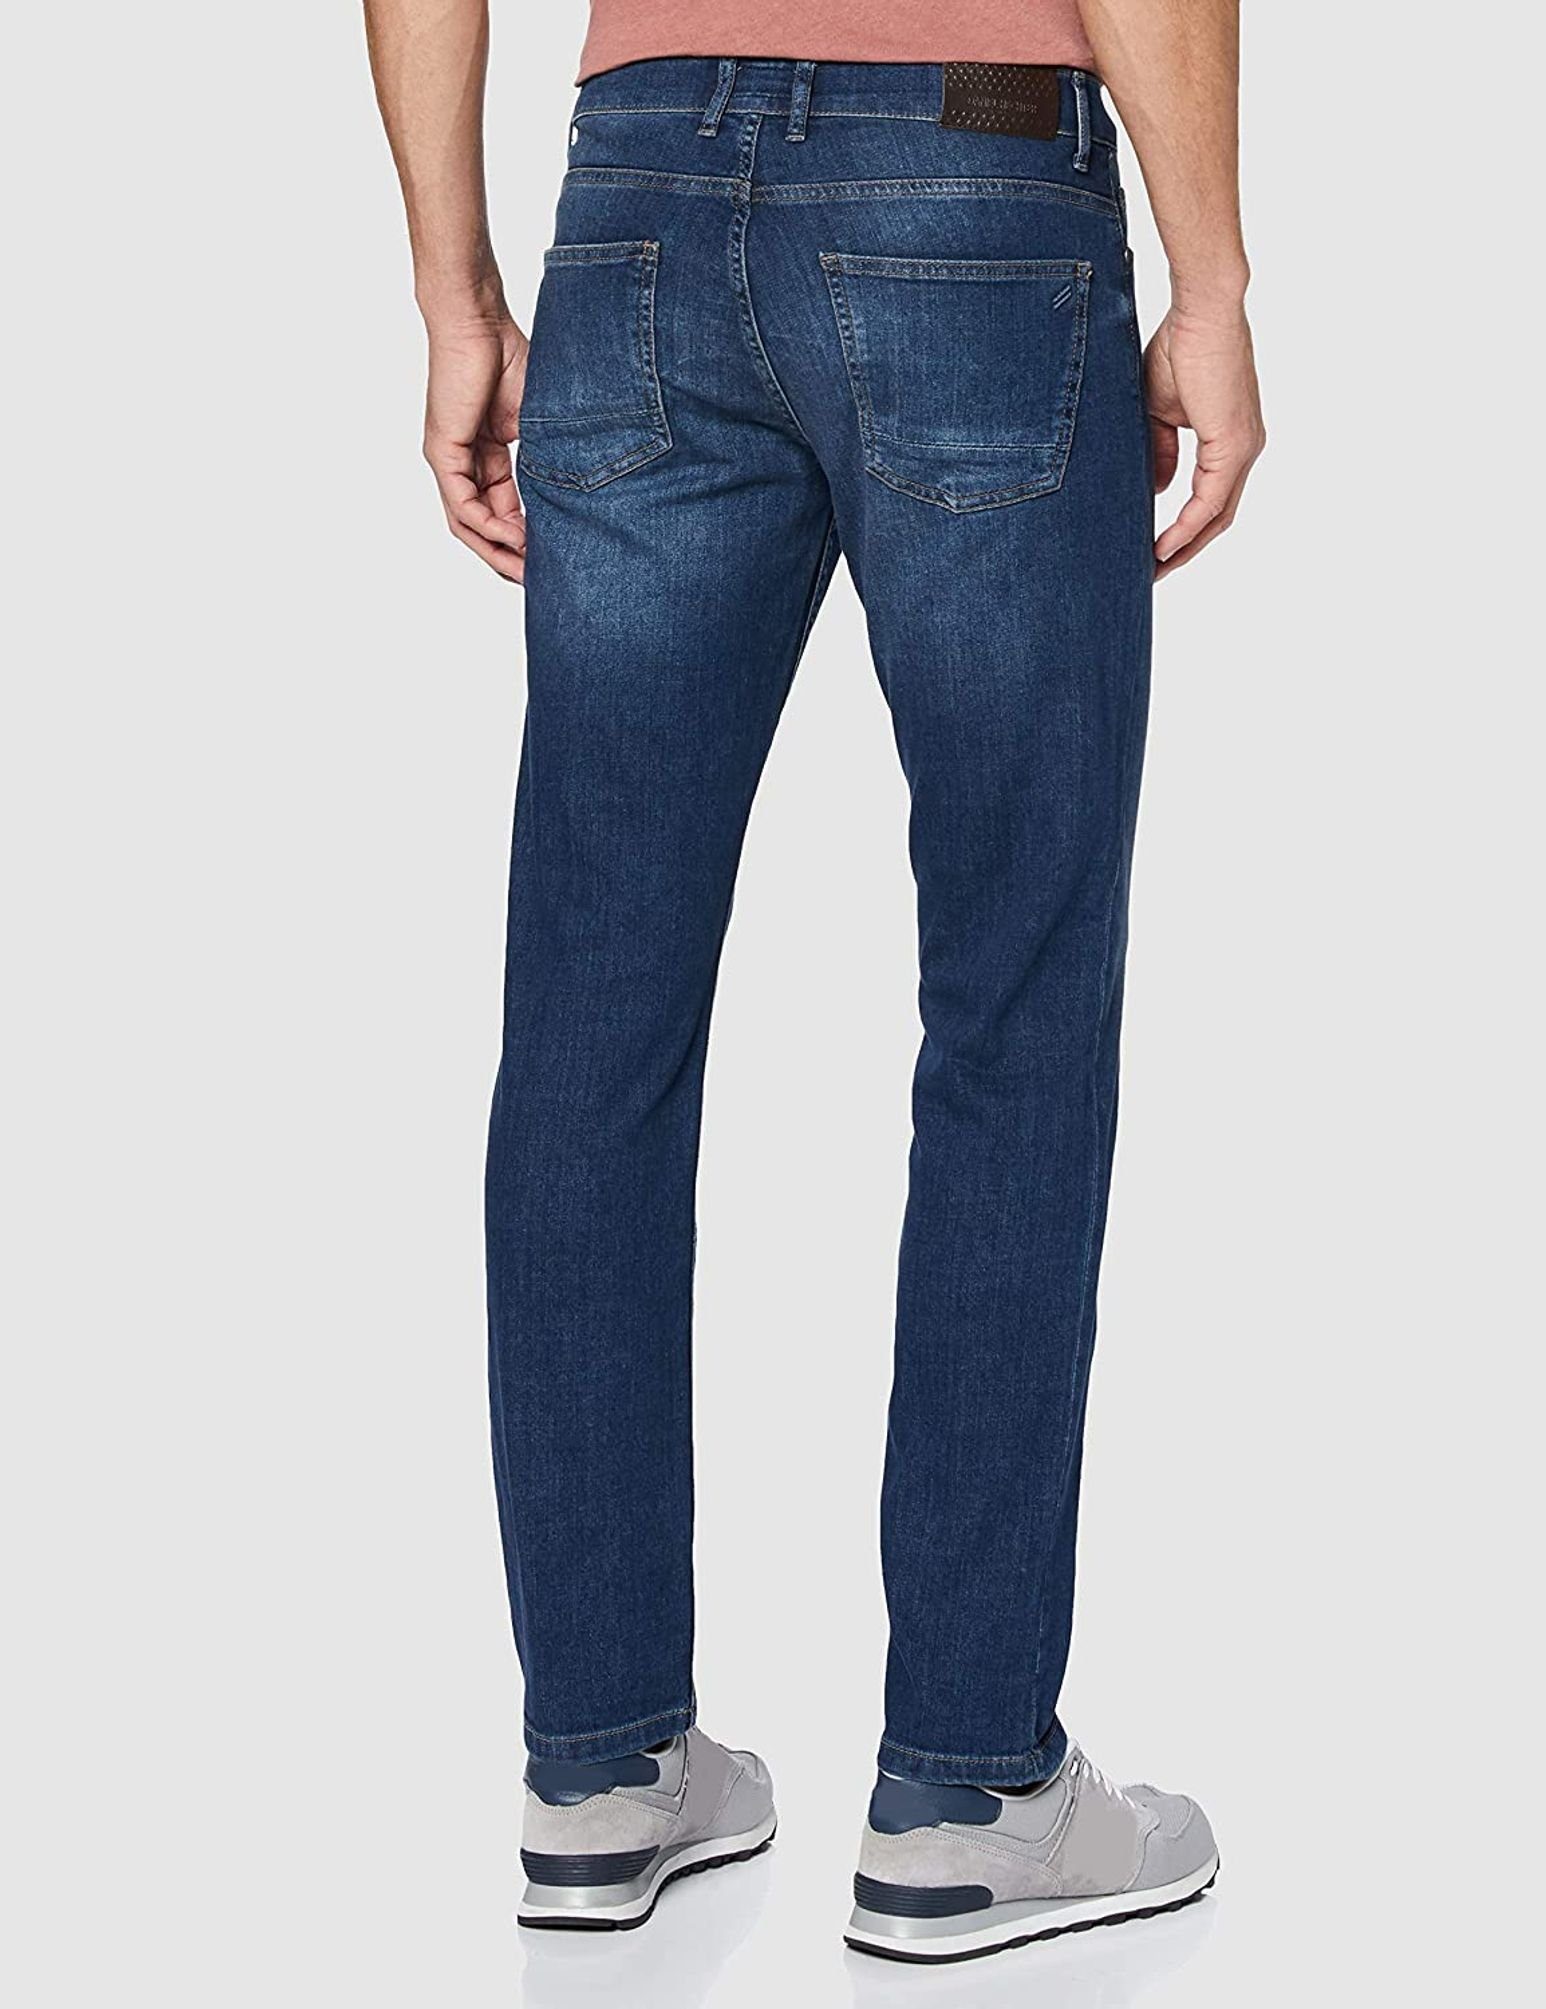 Daniel Hechter 5-Pocket-Jeans 100355-40090 Blau (680)